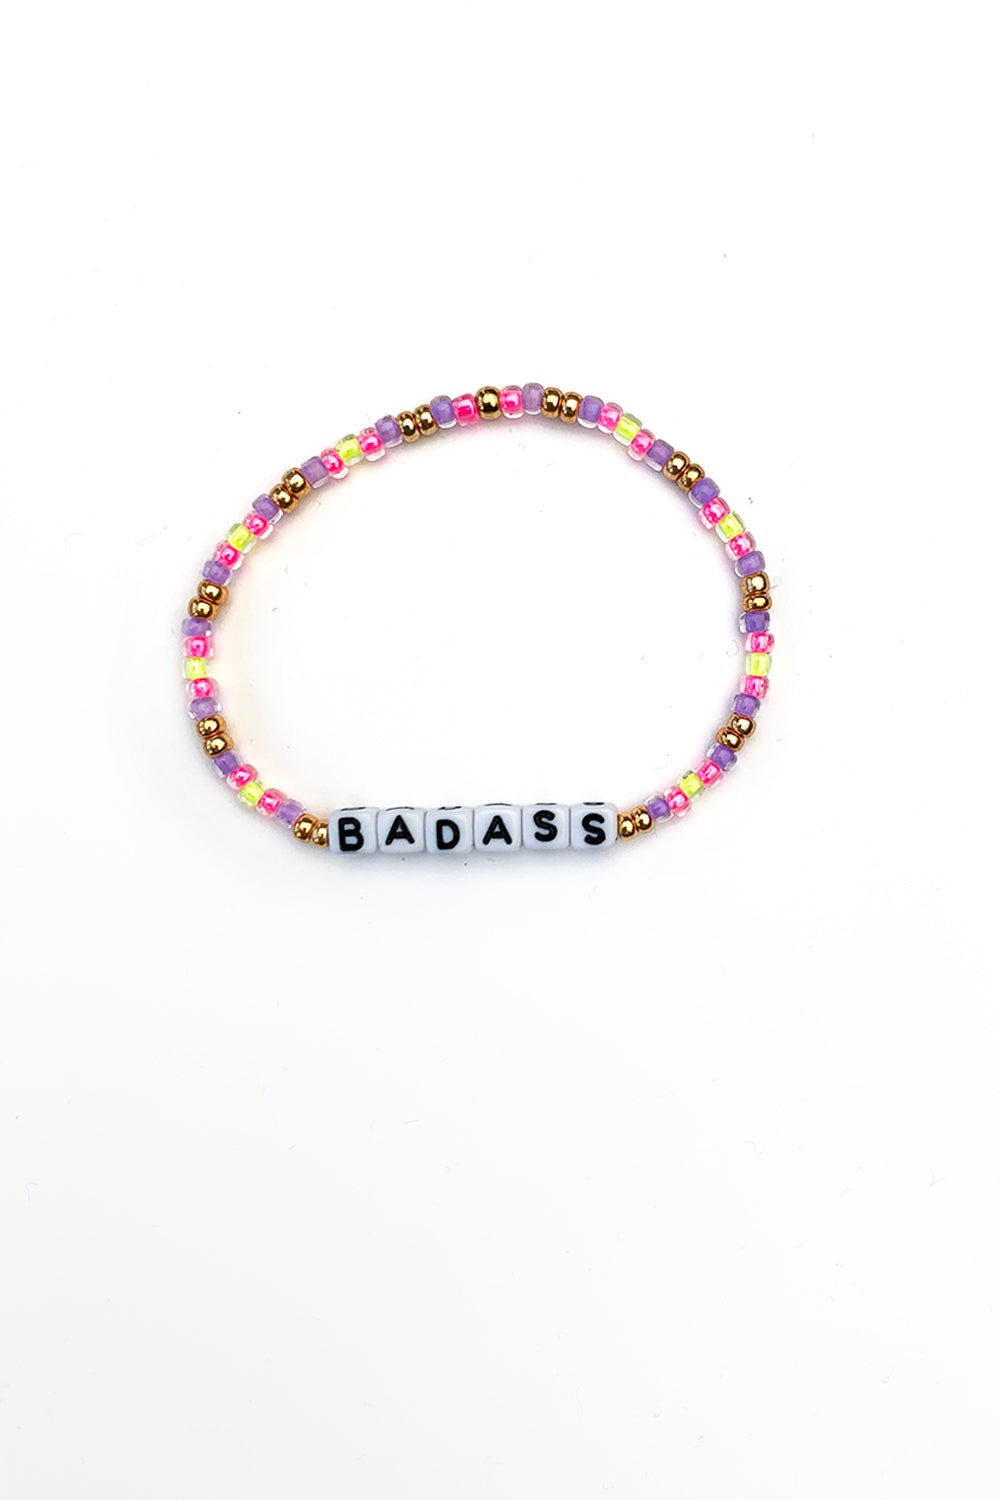 Sarah Marie Design Studio Bracelet Badass Disney Bracelet